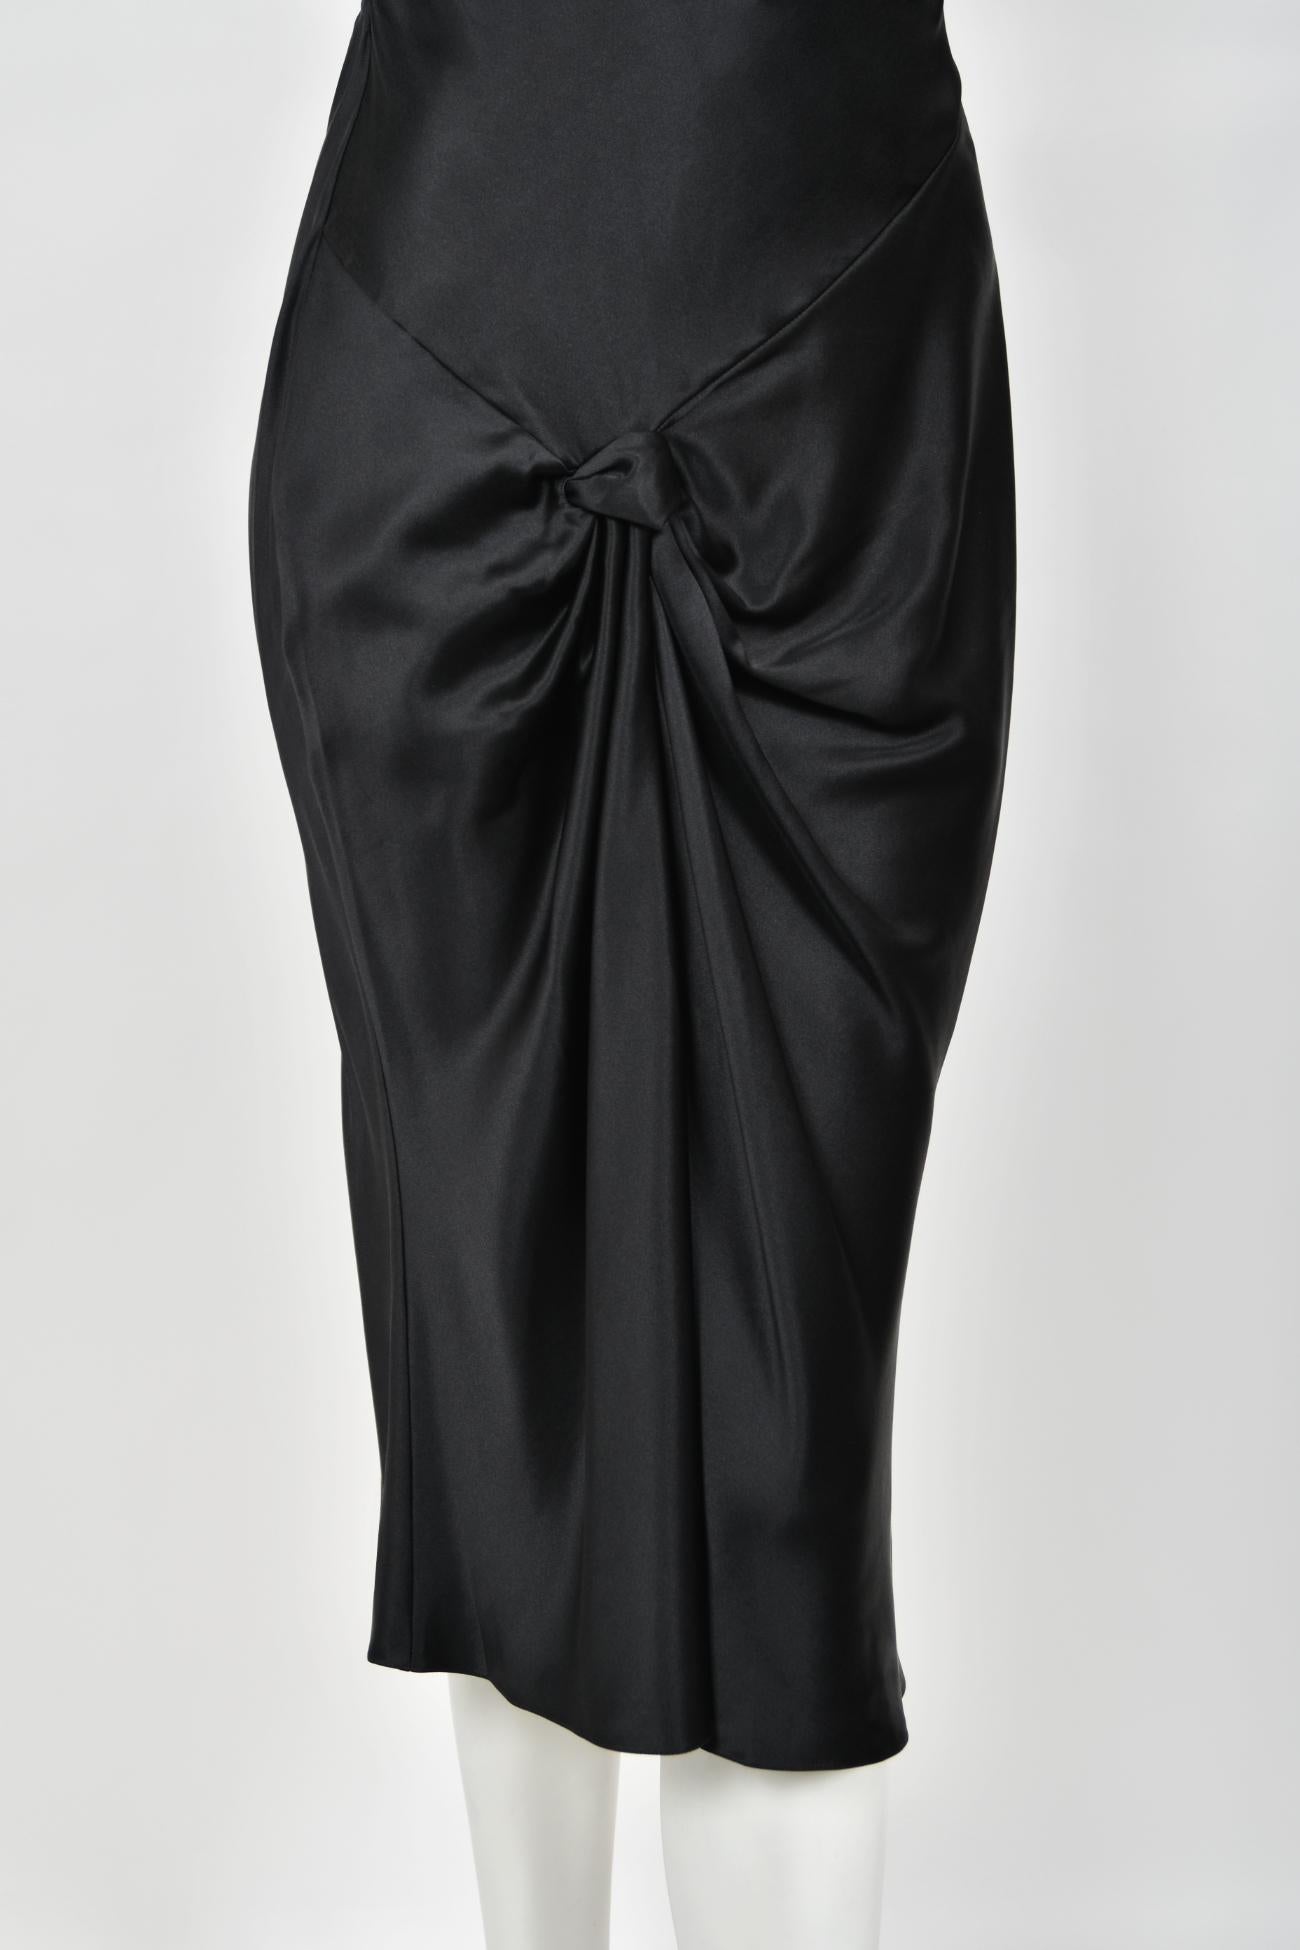 Women's 2004 Christian Dior by Galliano Black Silk Backless Draped Pearls Bias-Cut Dress